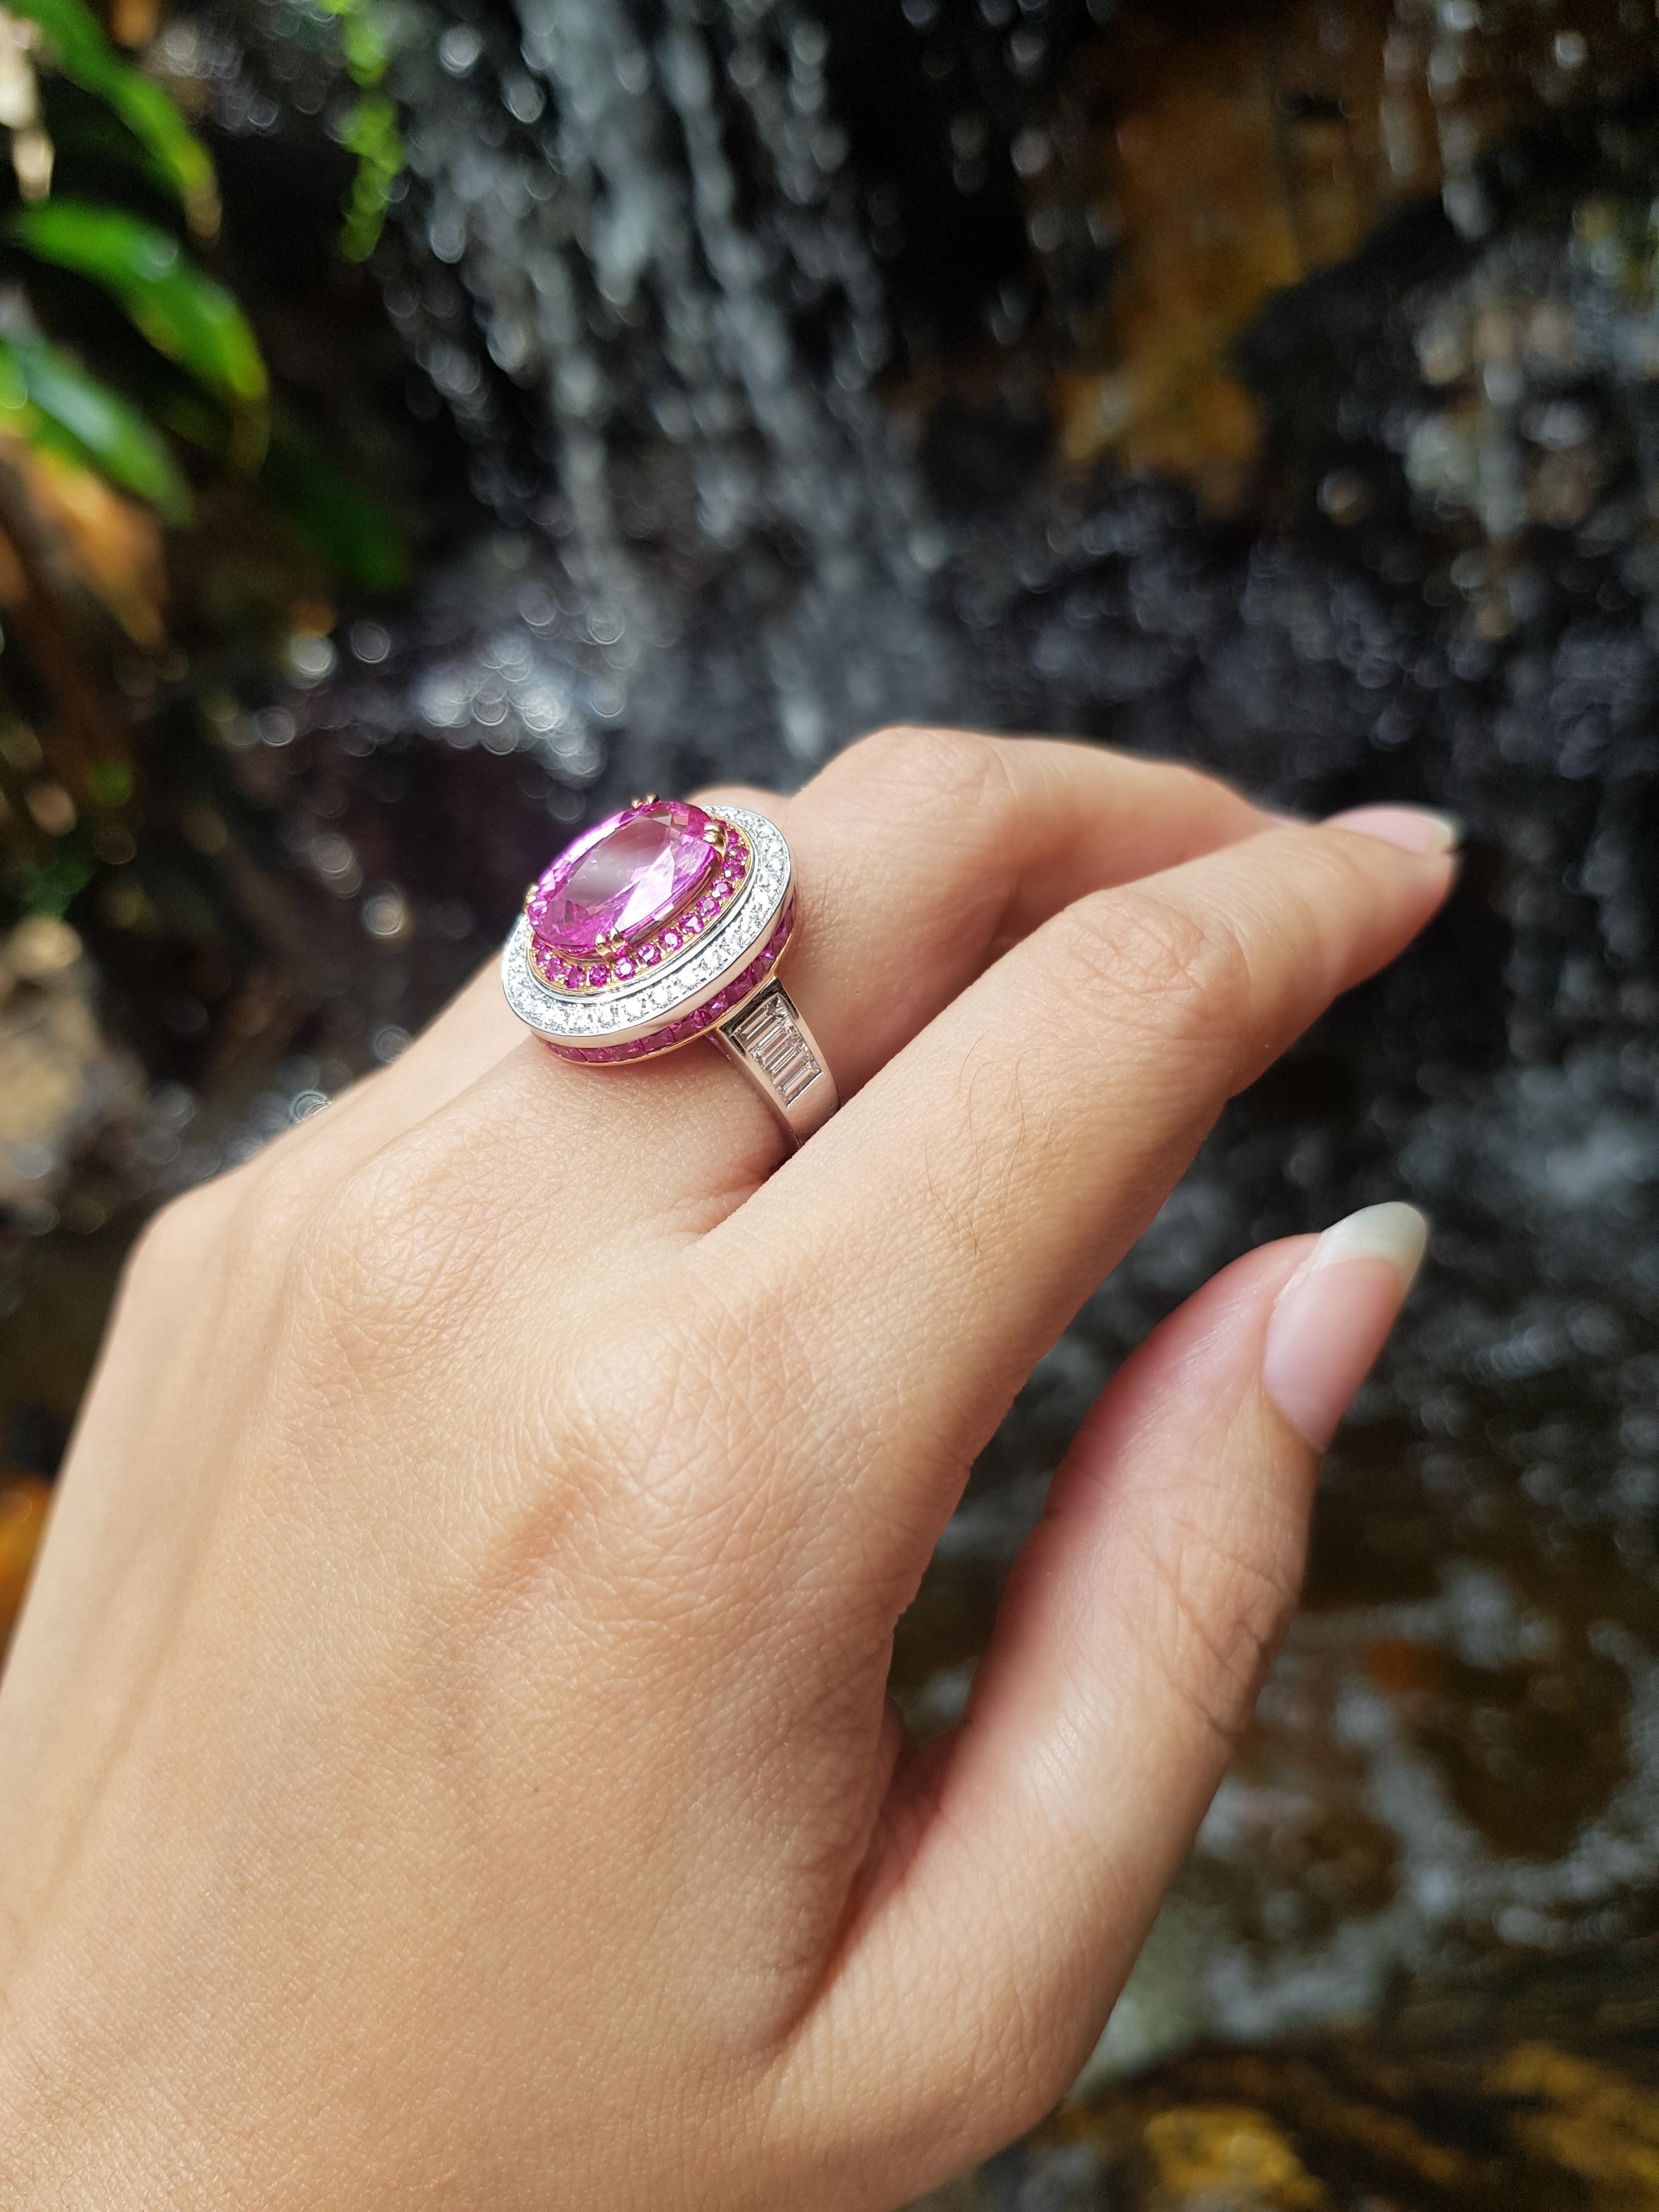 Pink Sapphire 5.51 carats with Pink Sapphire 2.25 carats and Diamond 0.90 carat Ring set in 18 Karat White Gold Settings
(TGL, Tokyo Gem Laboratory Thailand Certified)

Width:  1.6 cm 
Length:  2.1 cm
Ring Size: 53
Total Weight: 10.31 grams

Pink